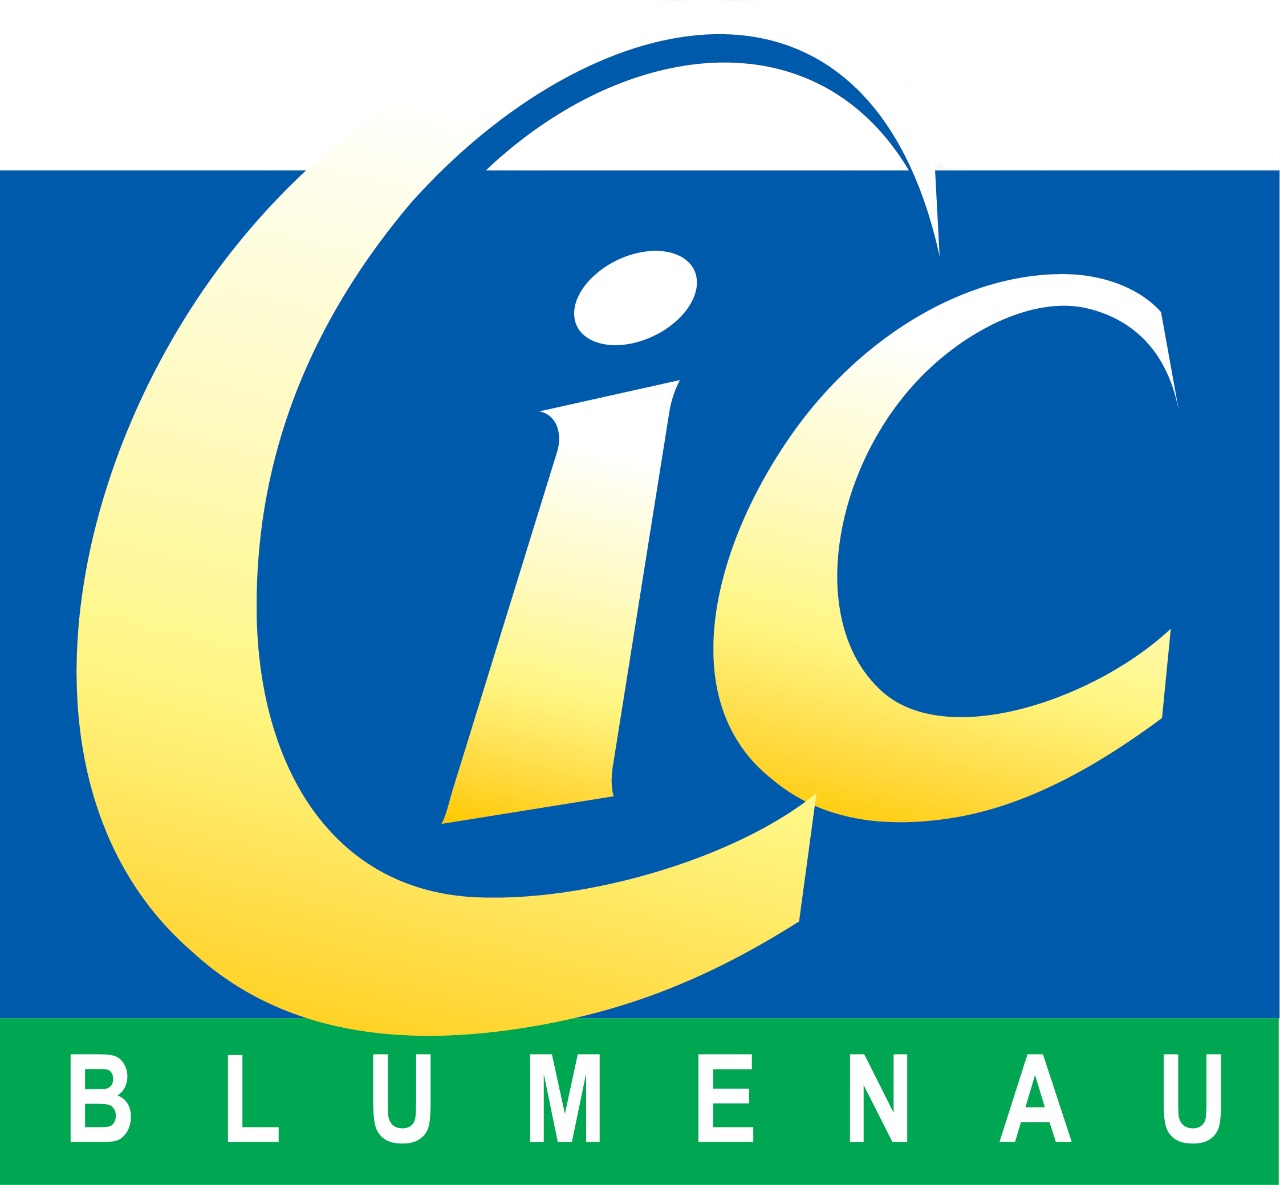 CIC Blumenanu